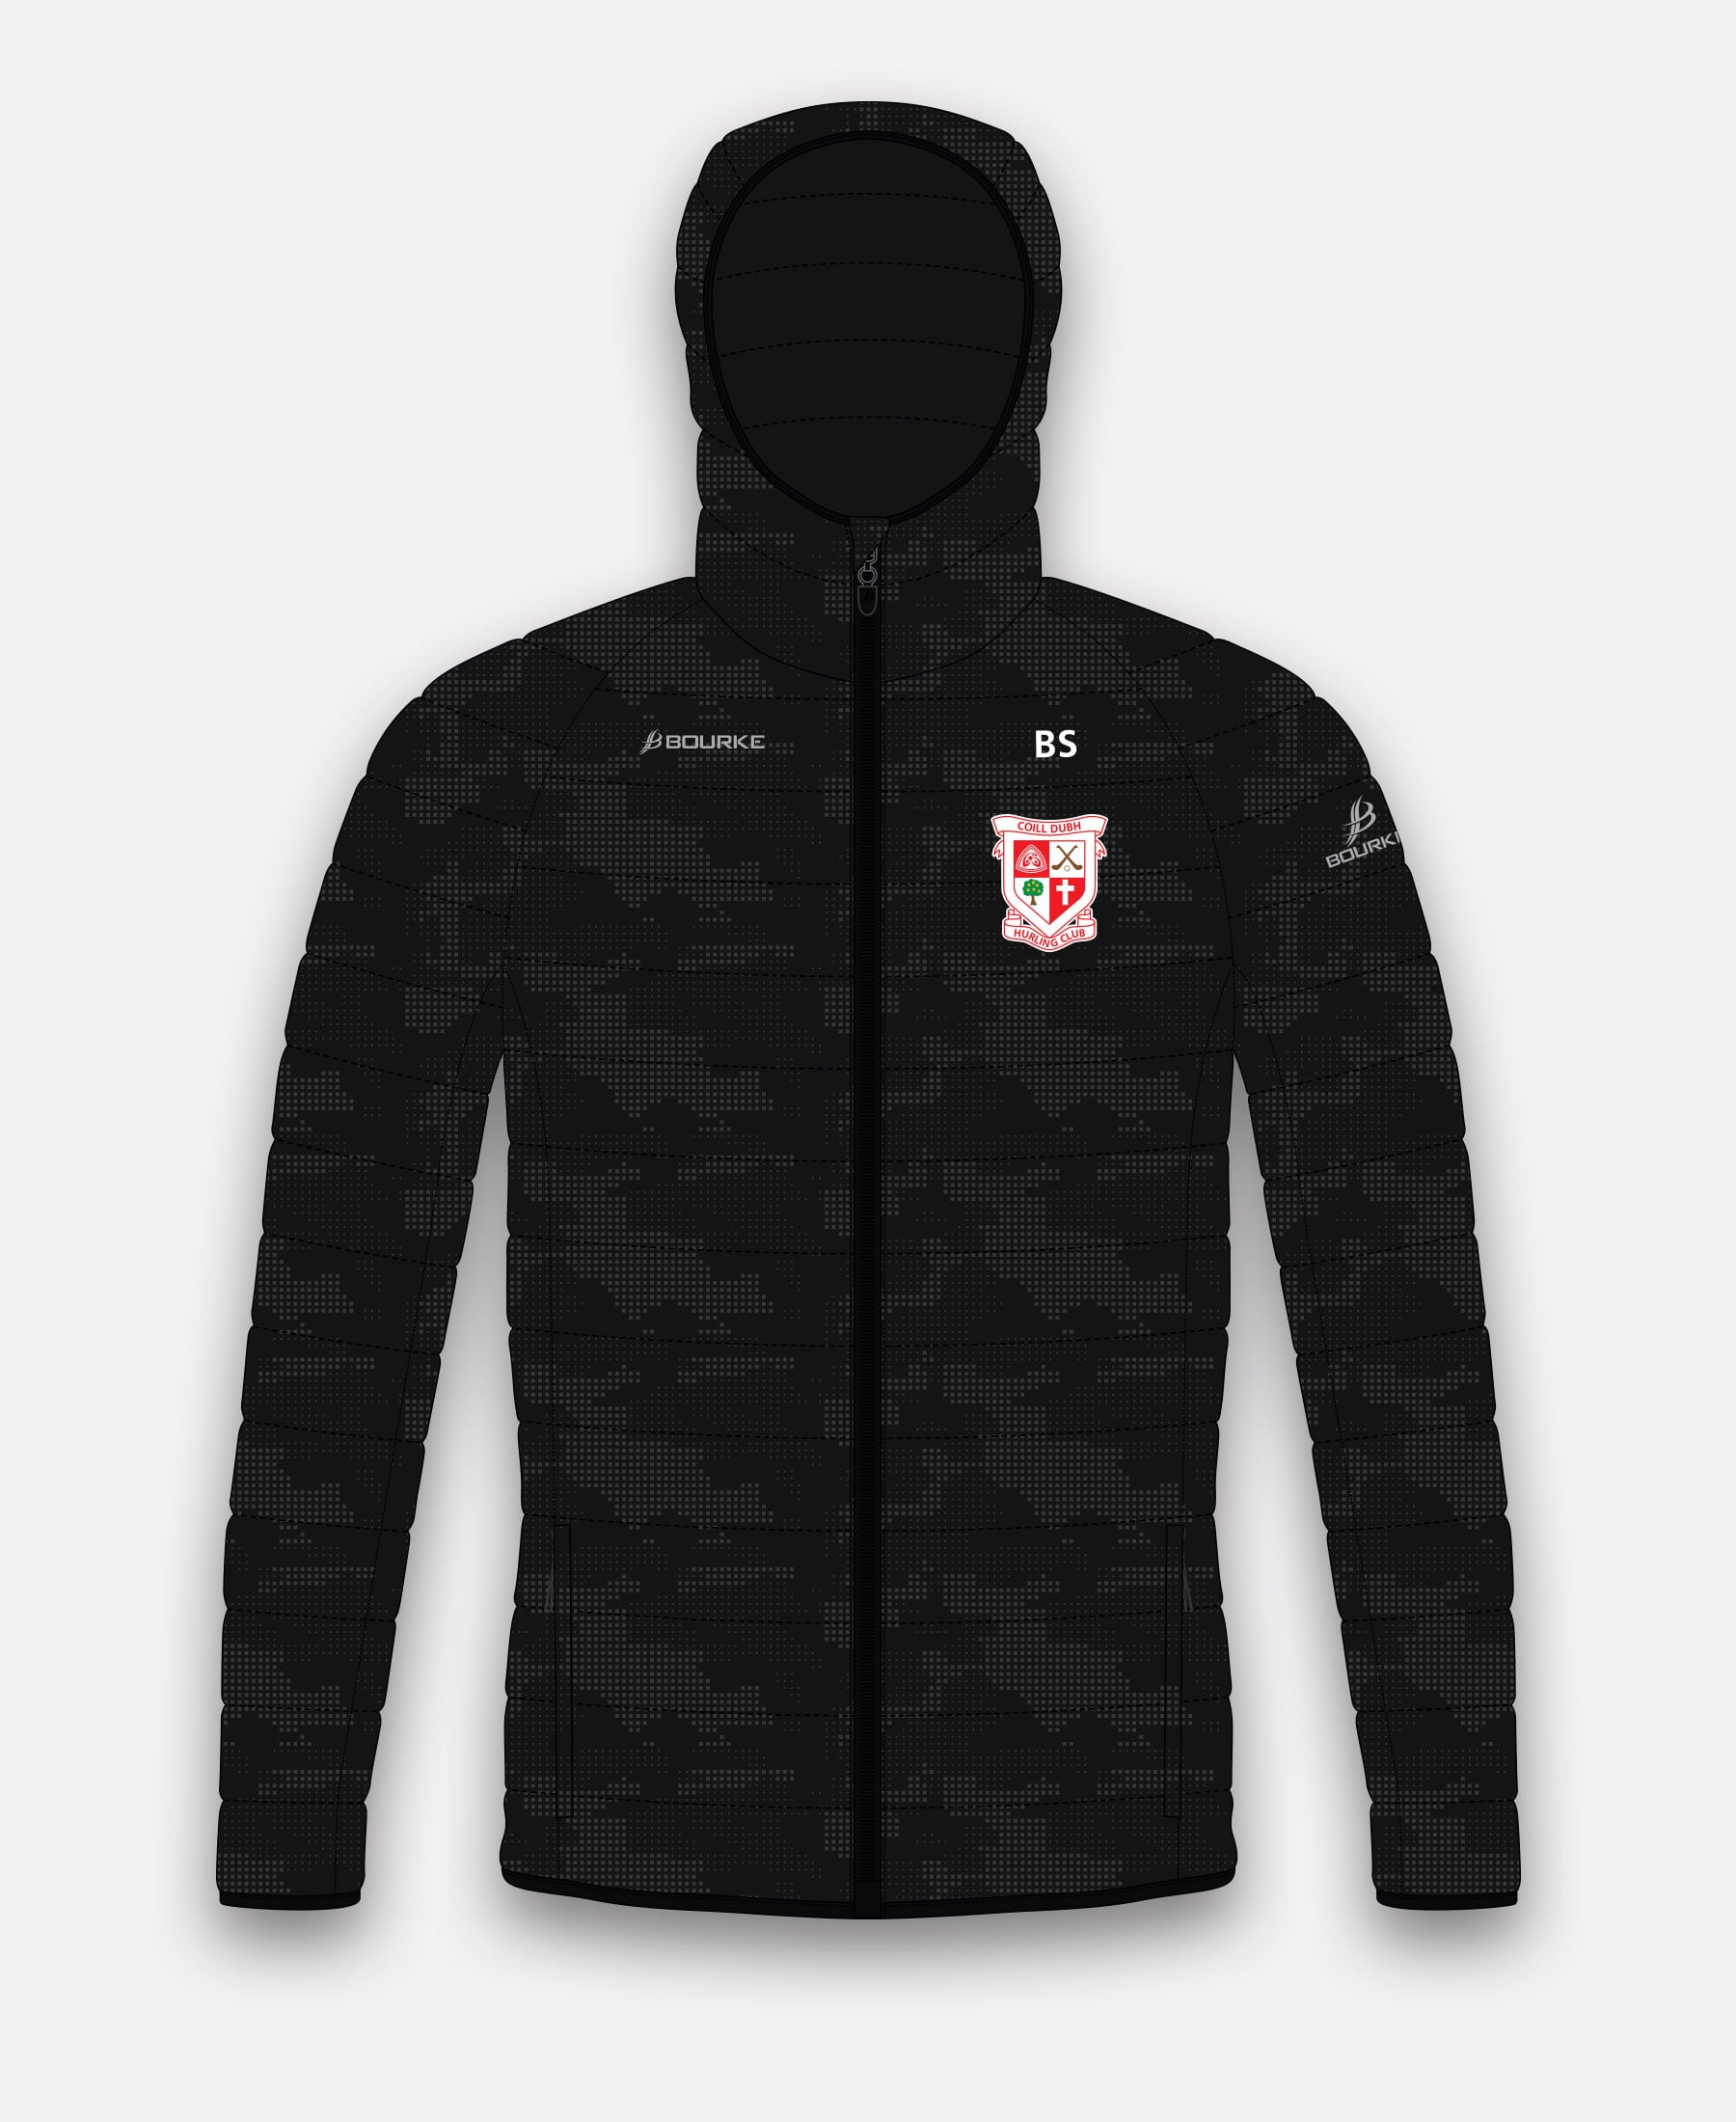 Coill Dubh Hurling Club Reflective Camo Jacket (Black)